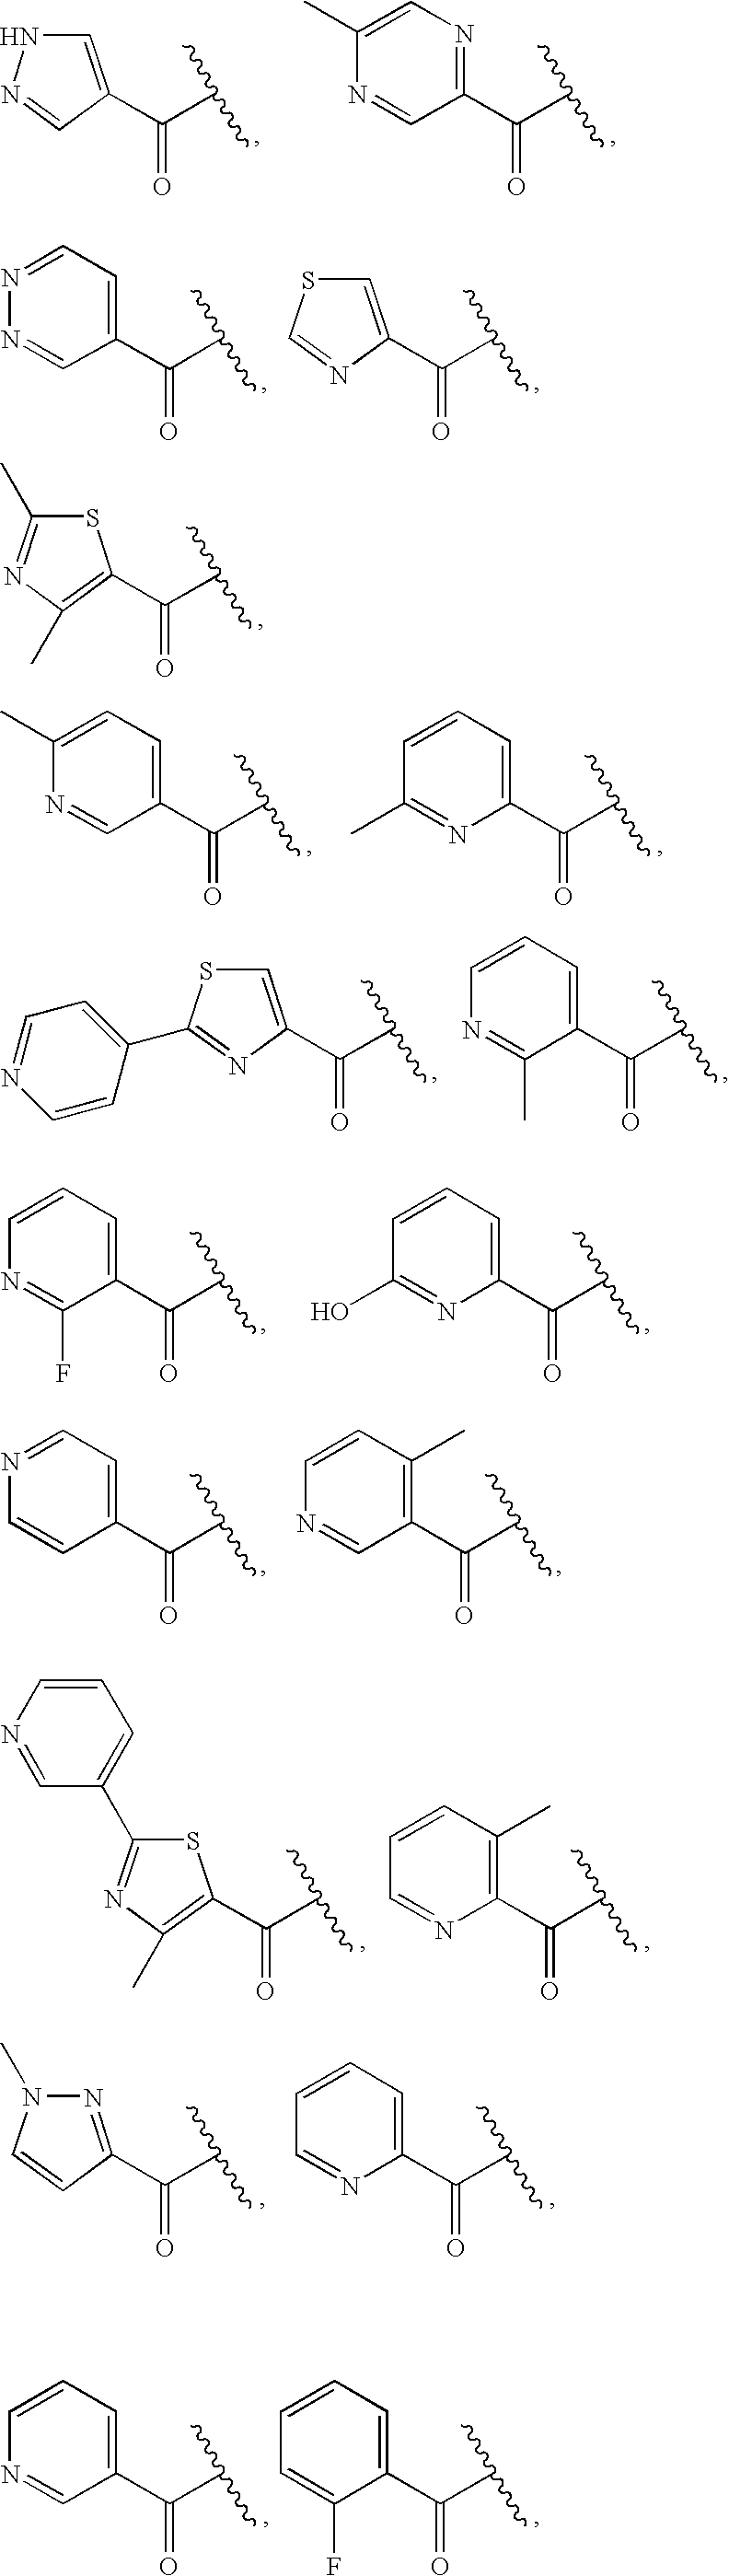 Quinoxalinyl derivatives